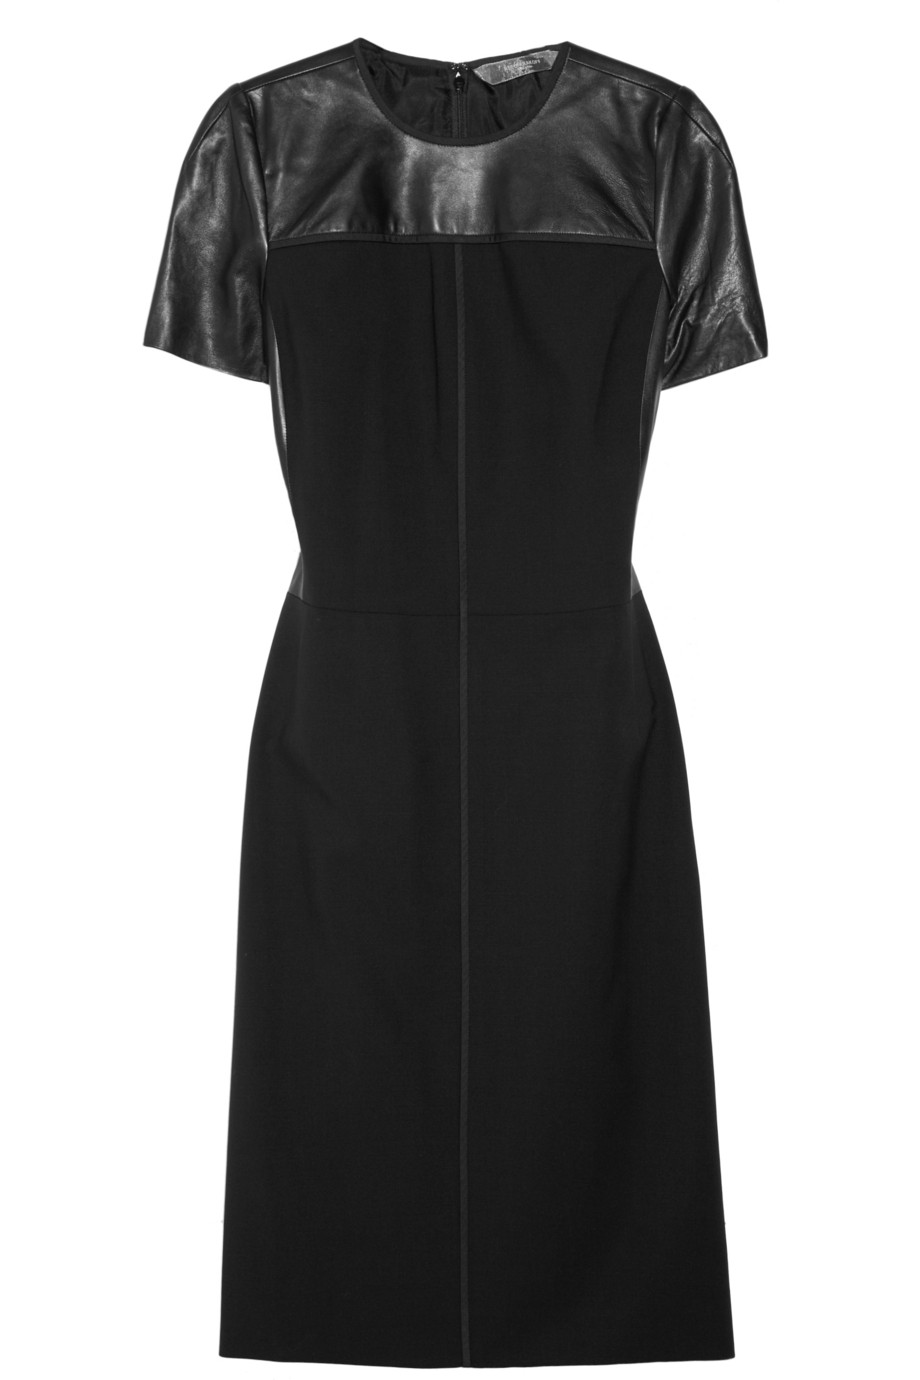 Reed krakoff Leathertrimmed Stretch Woolblend Dress in Black | Lyst